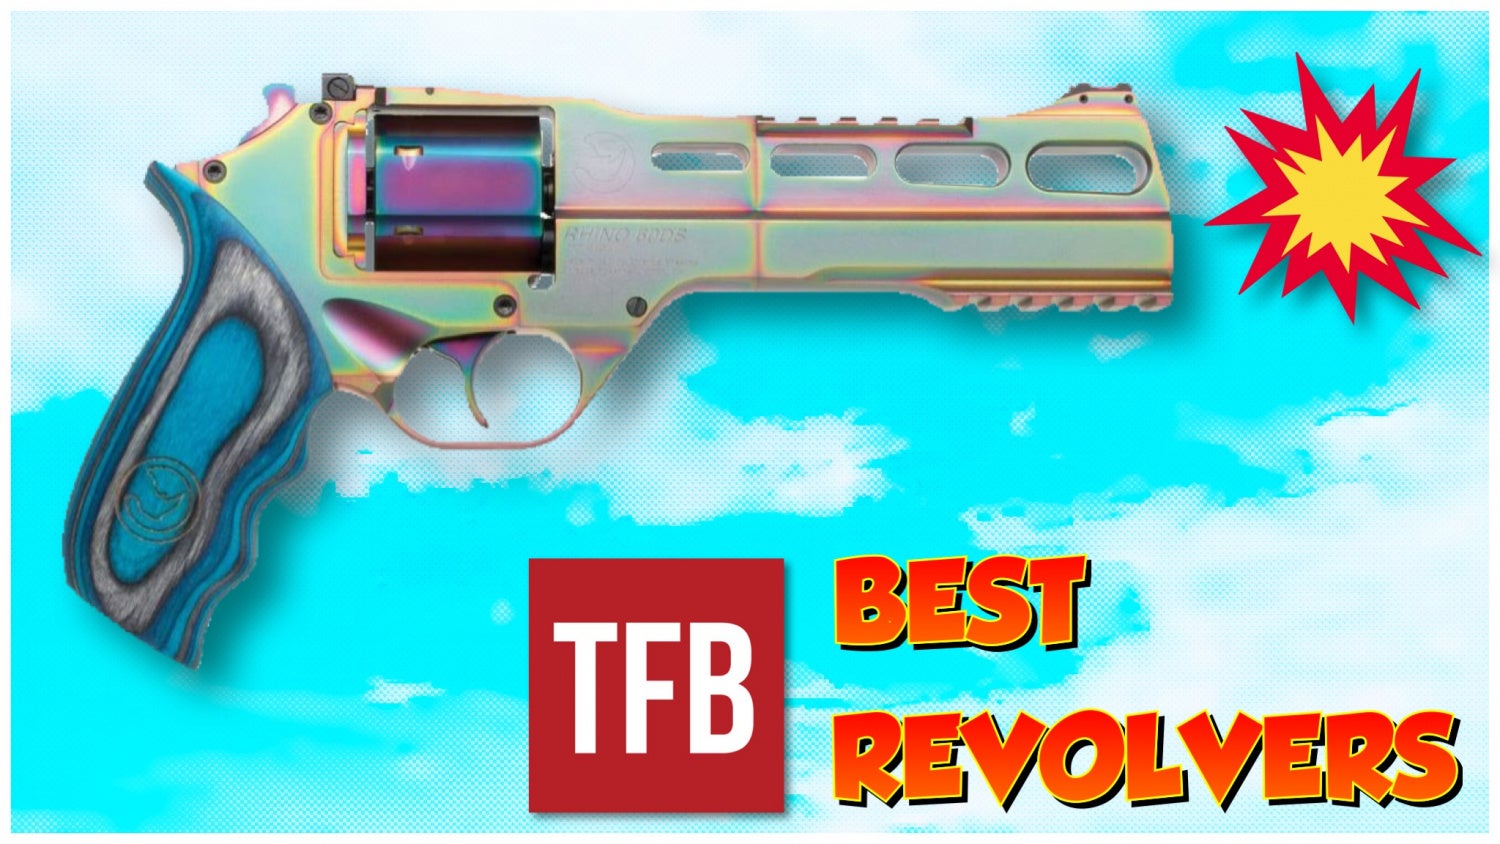 Best Combat Revolver